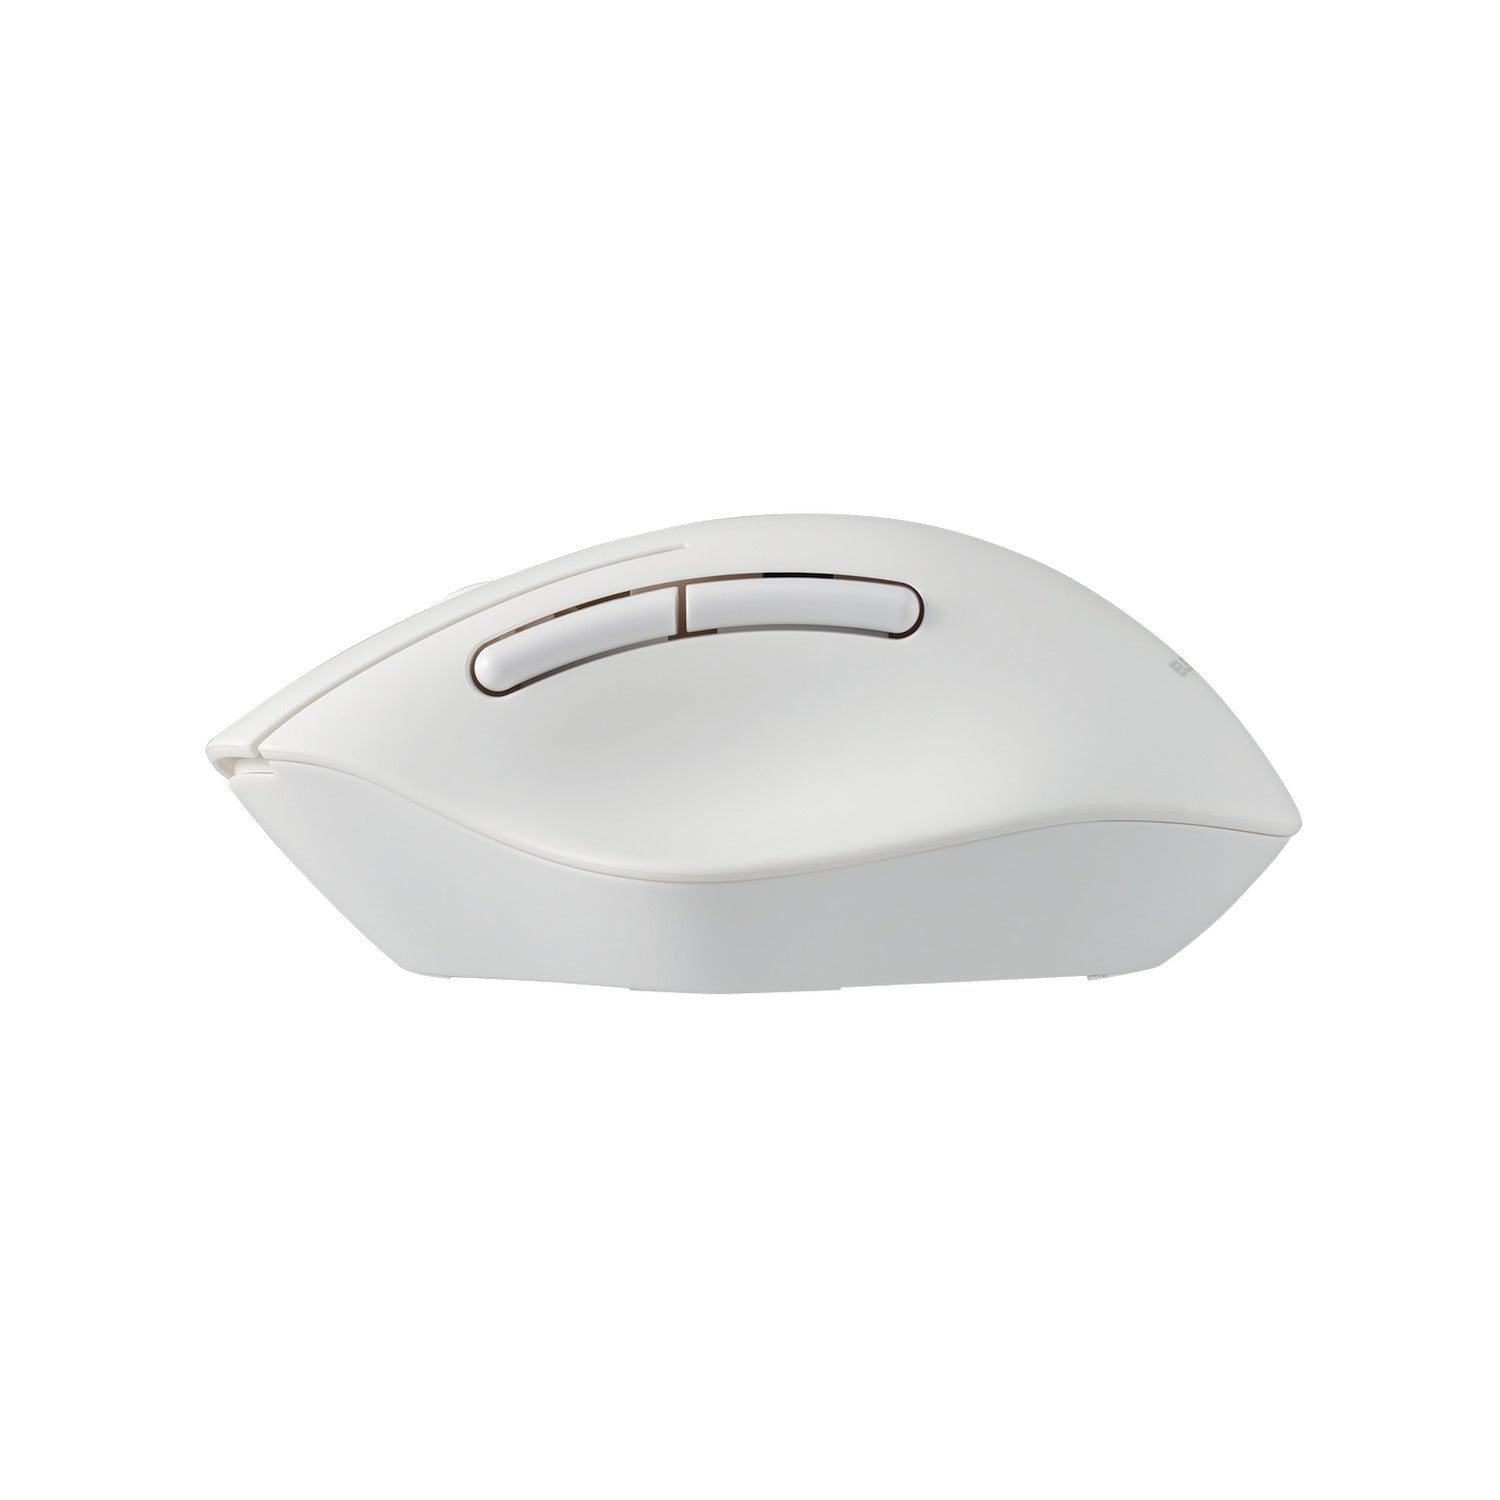 SH20 Ergonomic Mouse - Bluetooth